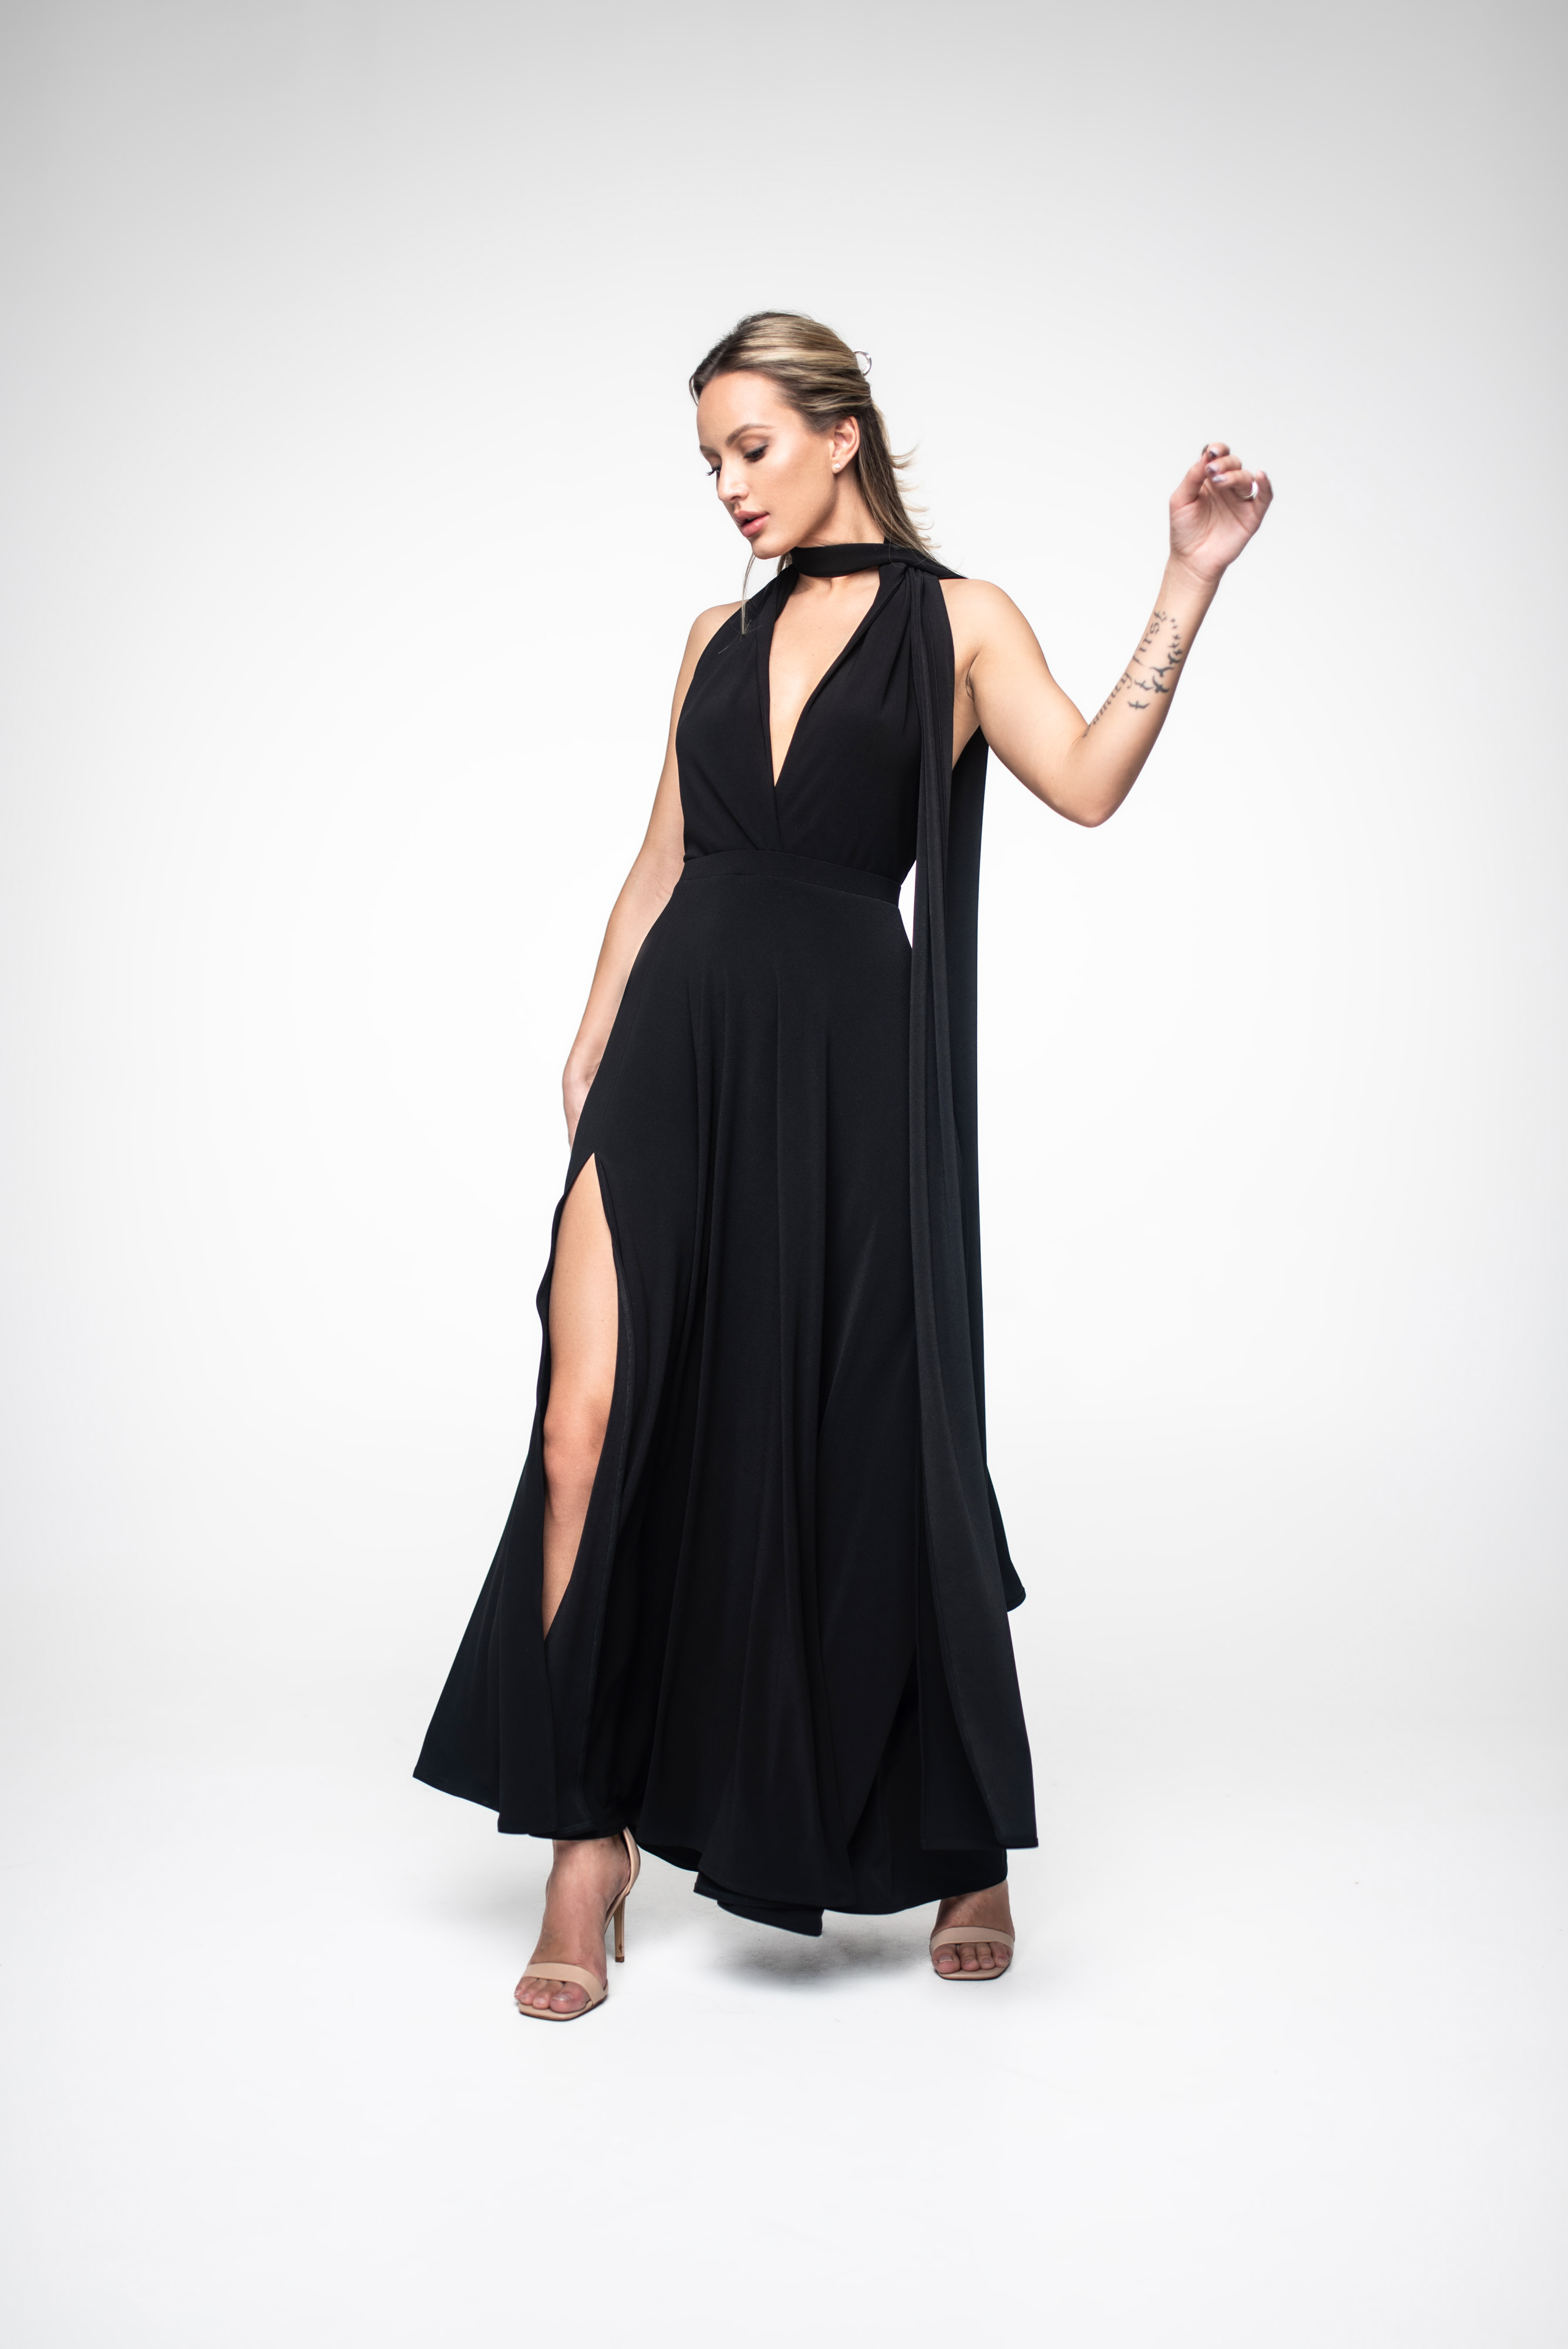 Black stretchy long MULTI dress